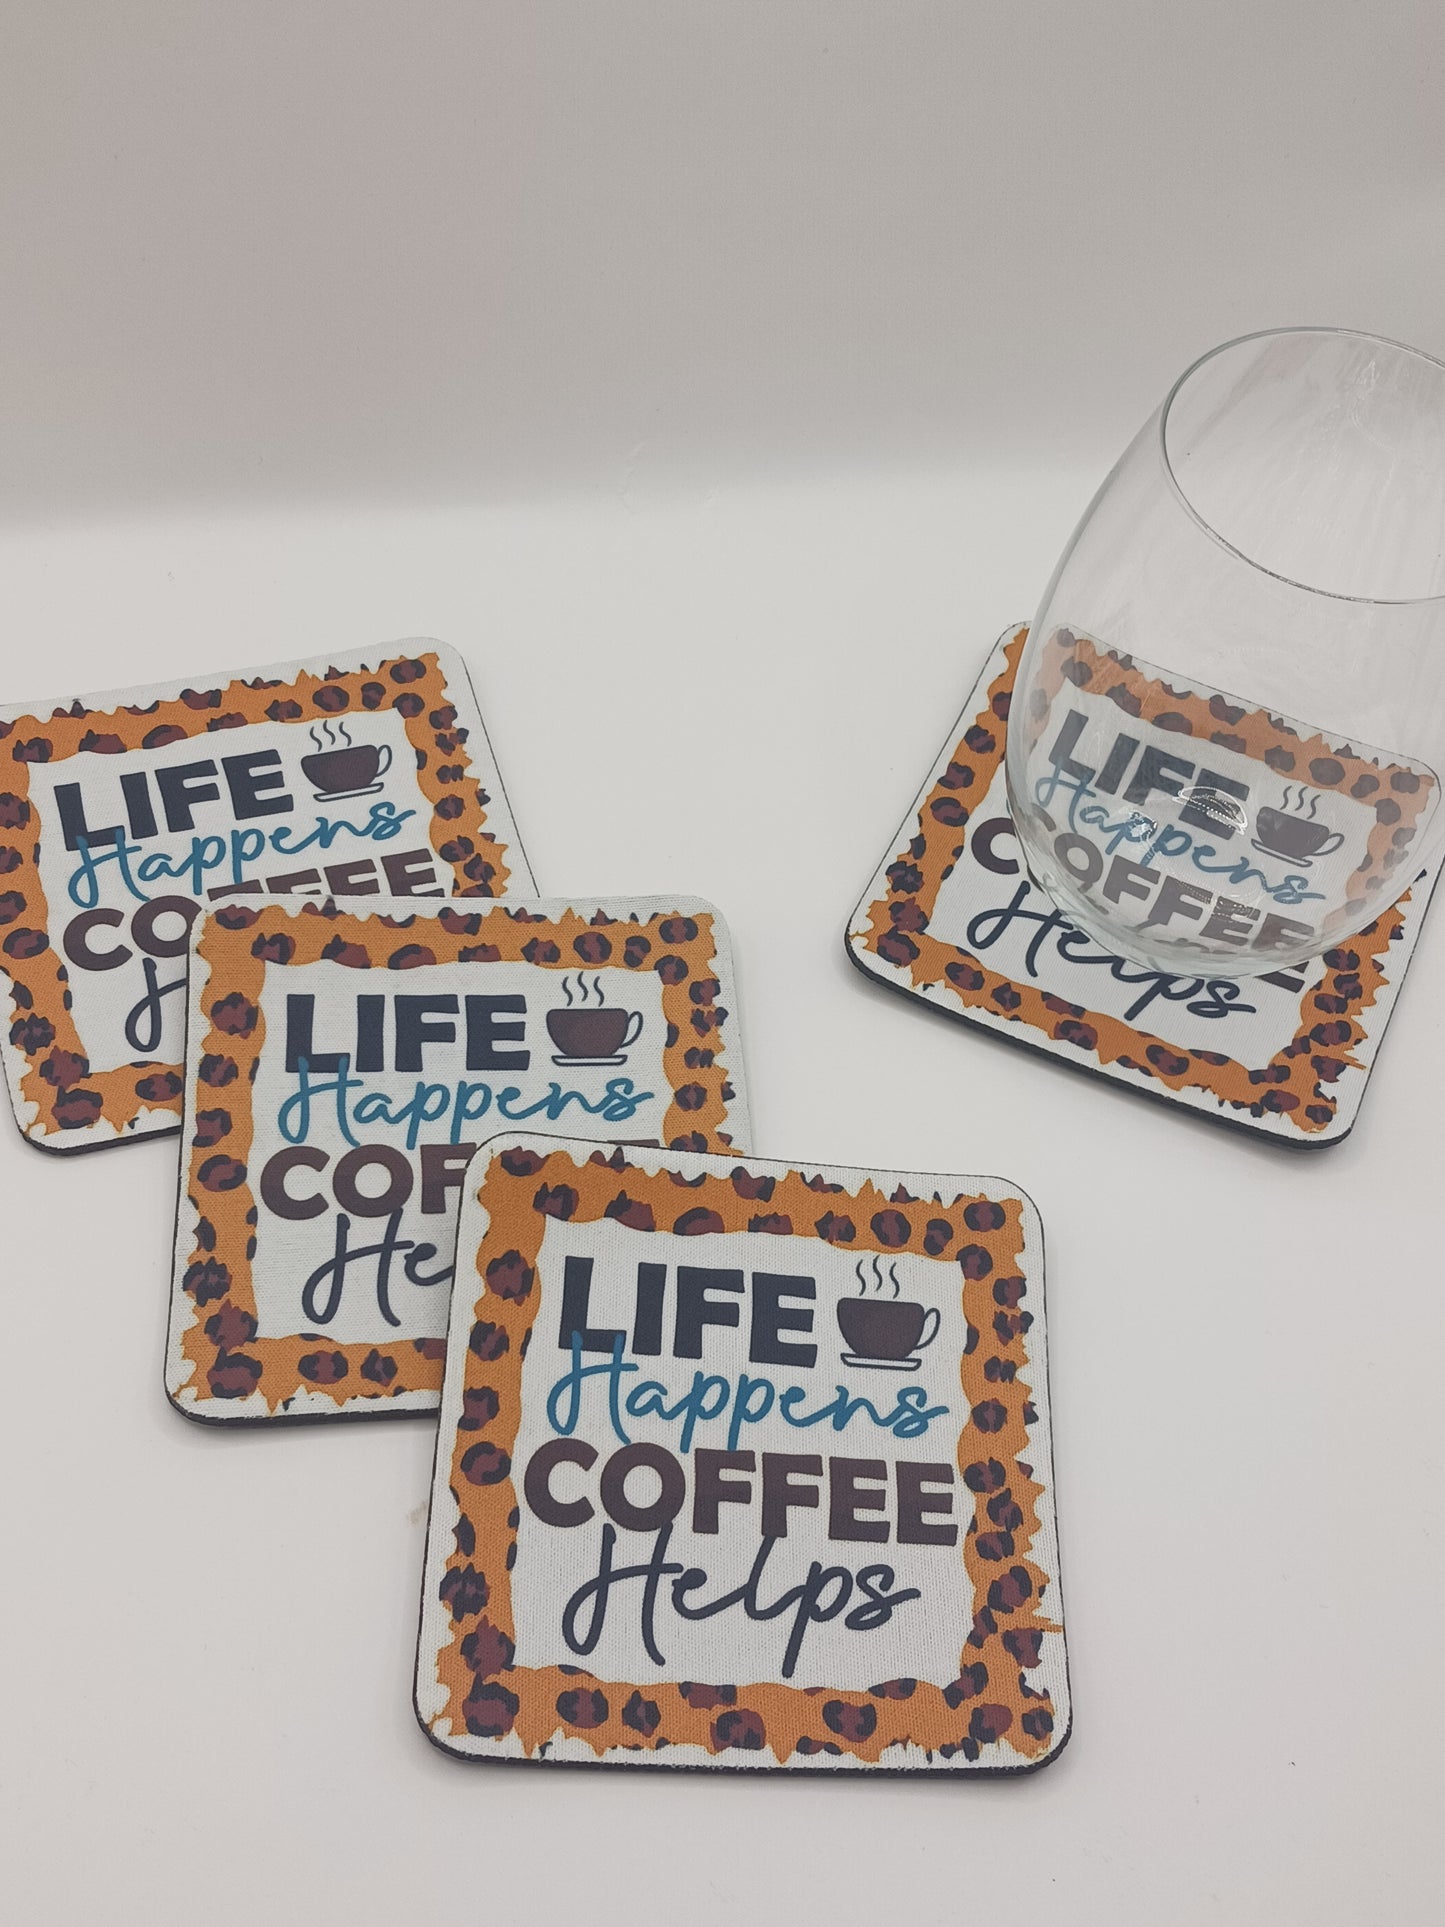 Life happens coffee helps tabletop coasters